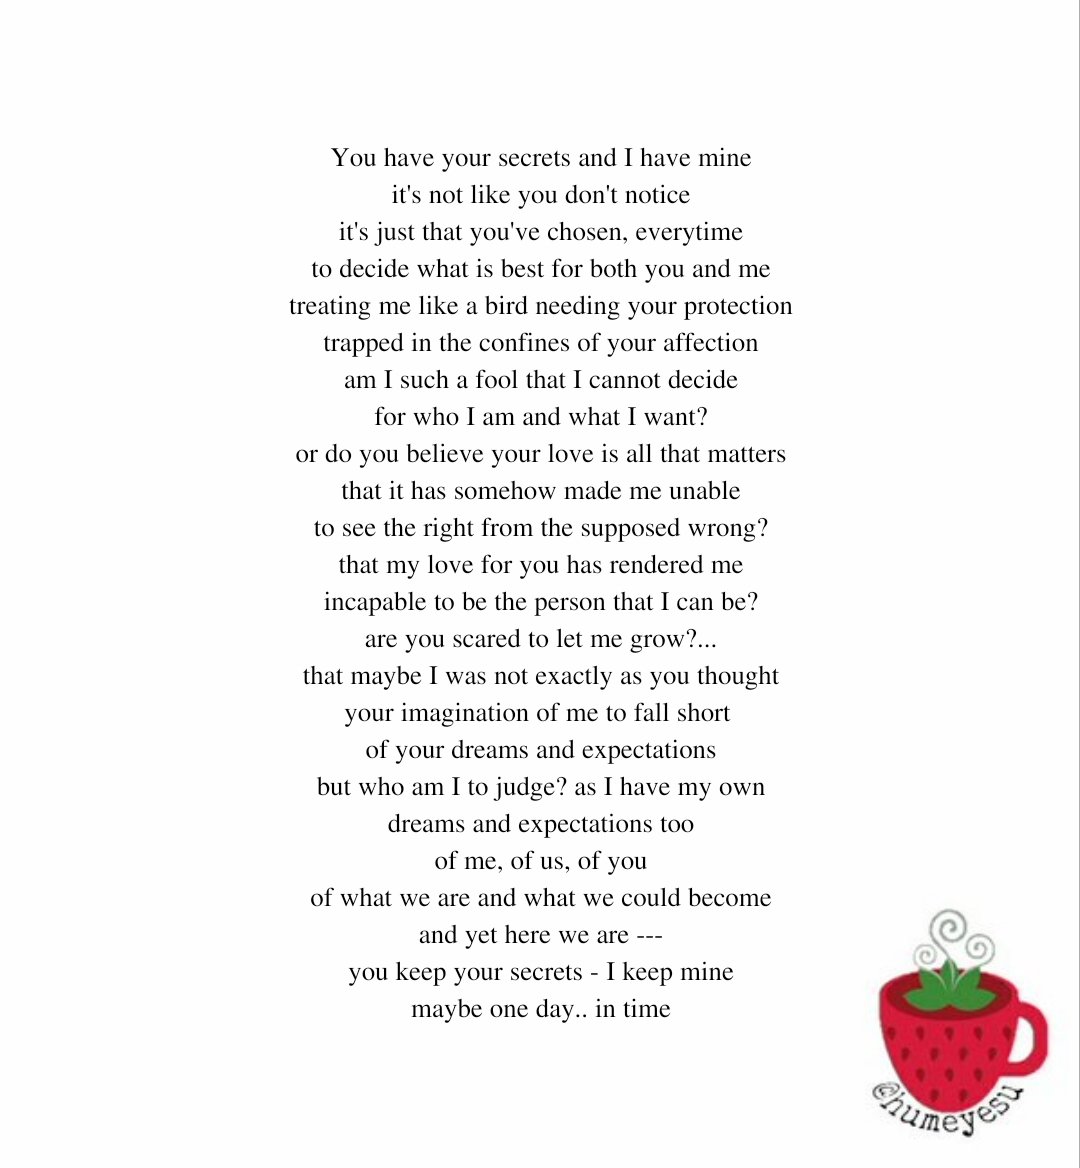 Secrets
#poem #poemsporn #poetry #poetrycommunity #writingcommunity #poetsofinstagram #read #wordporn #writing #creativewriting #bleedink #poemoftheday #poetryislife #poets #poemjungle #humeyesu